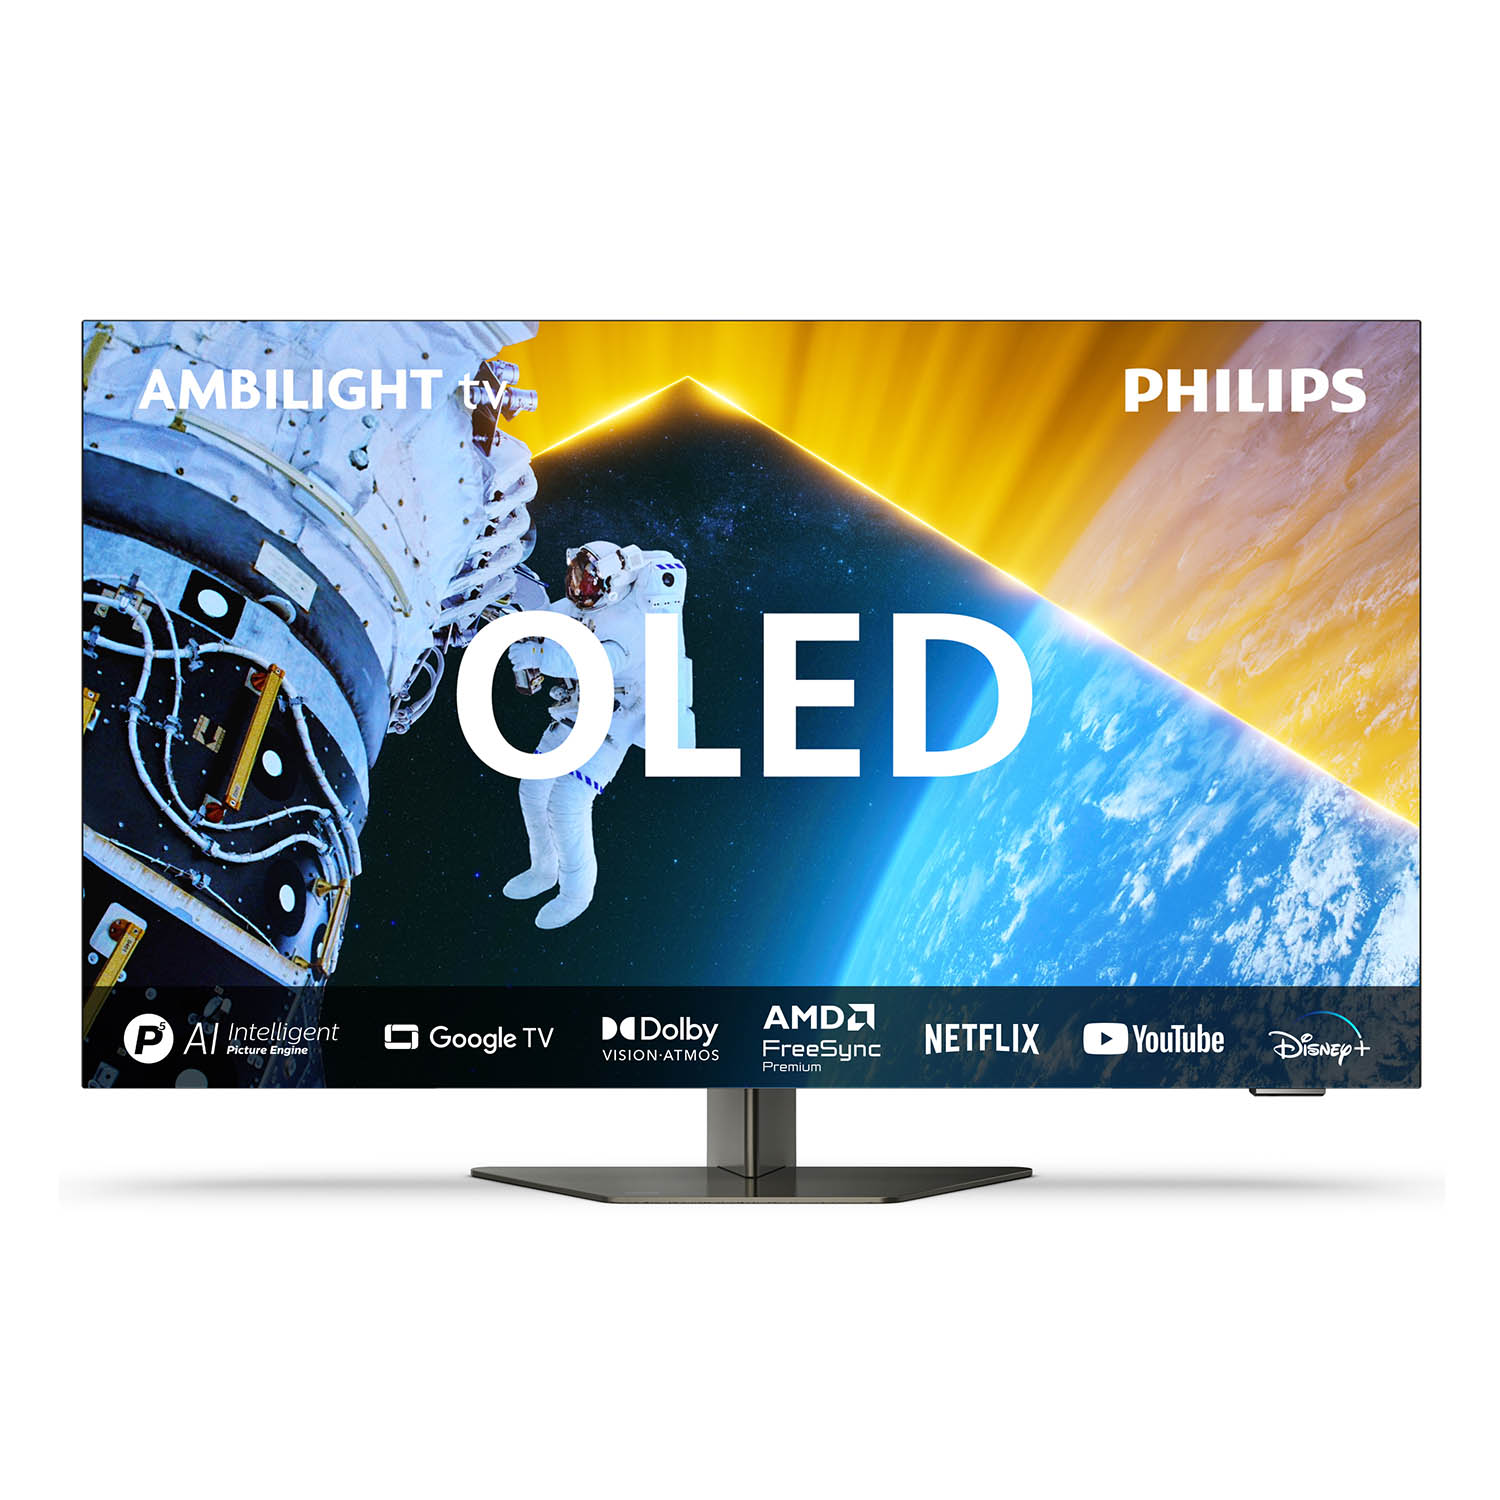 Philips Ambilight TV OLED809 OLED-TV - TV & Surround - TV